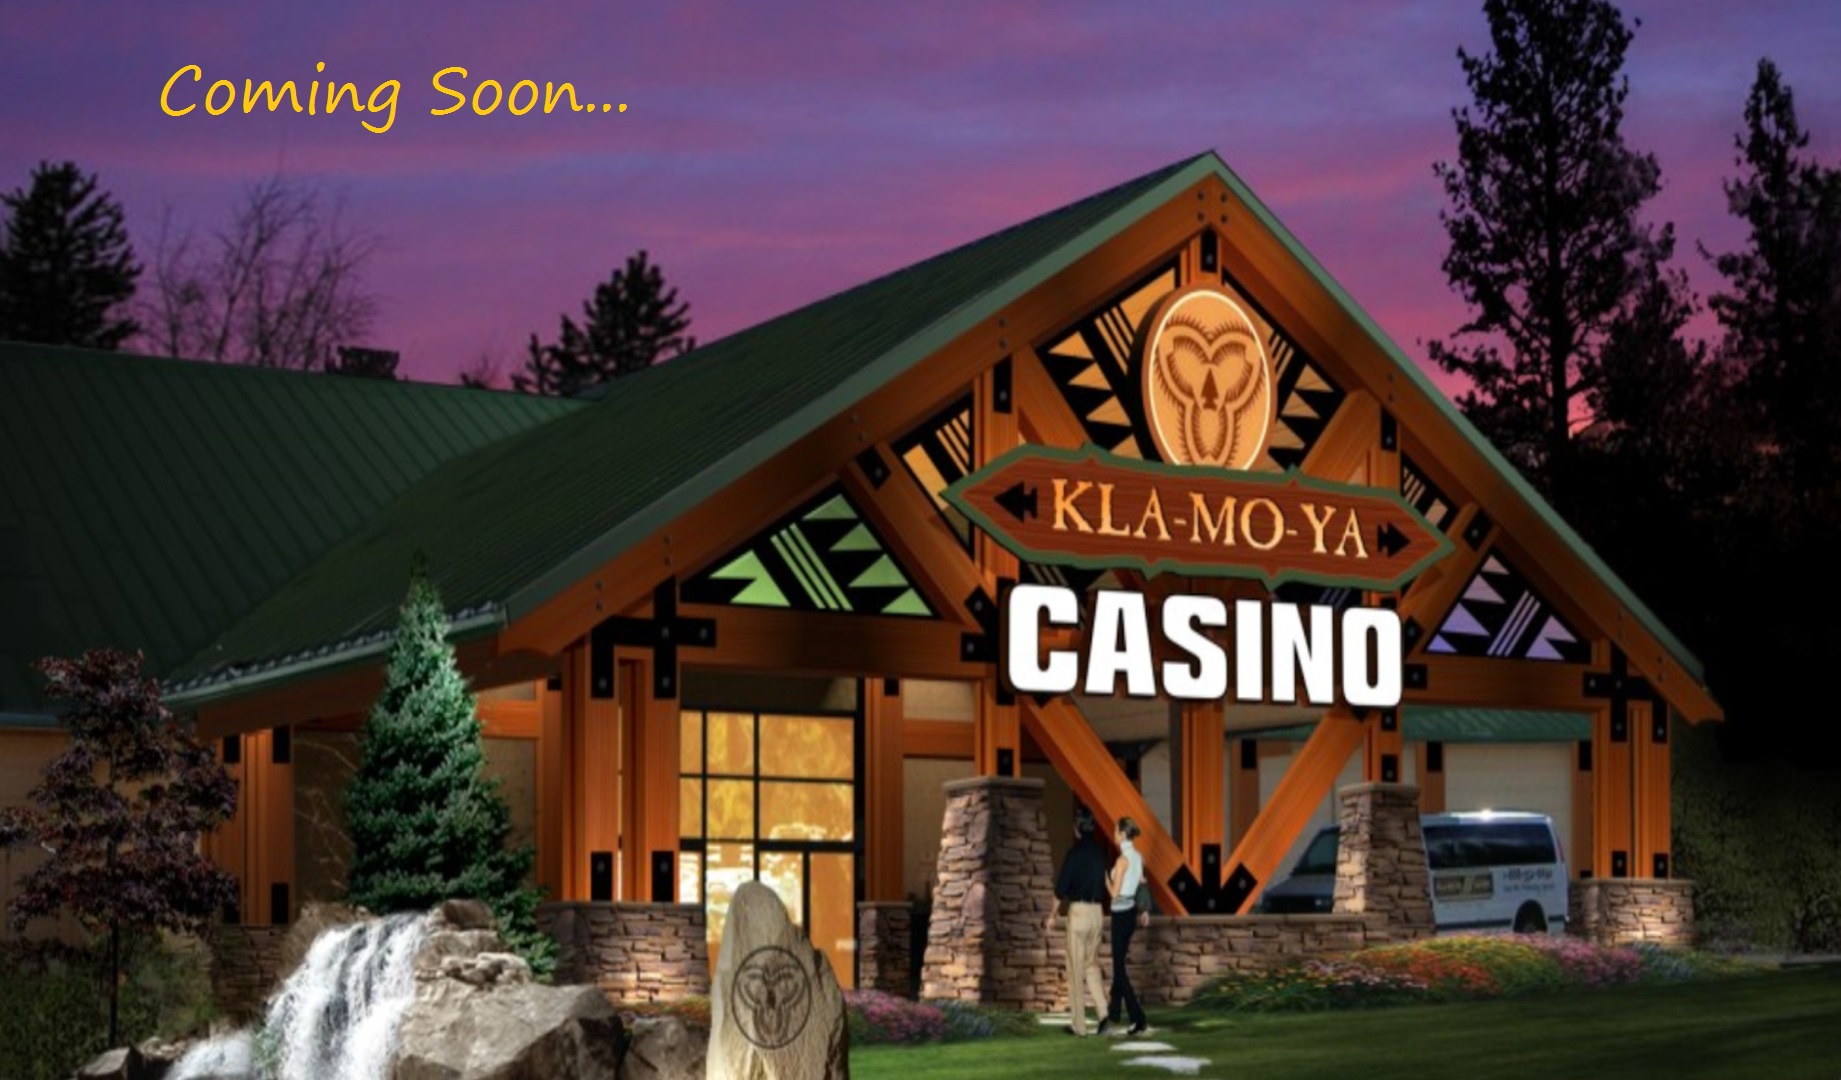 Kla-Mo-Ya Casino Adds Hotel and Upgrades Air Quality…